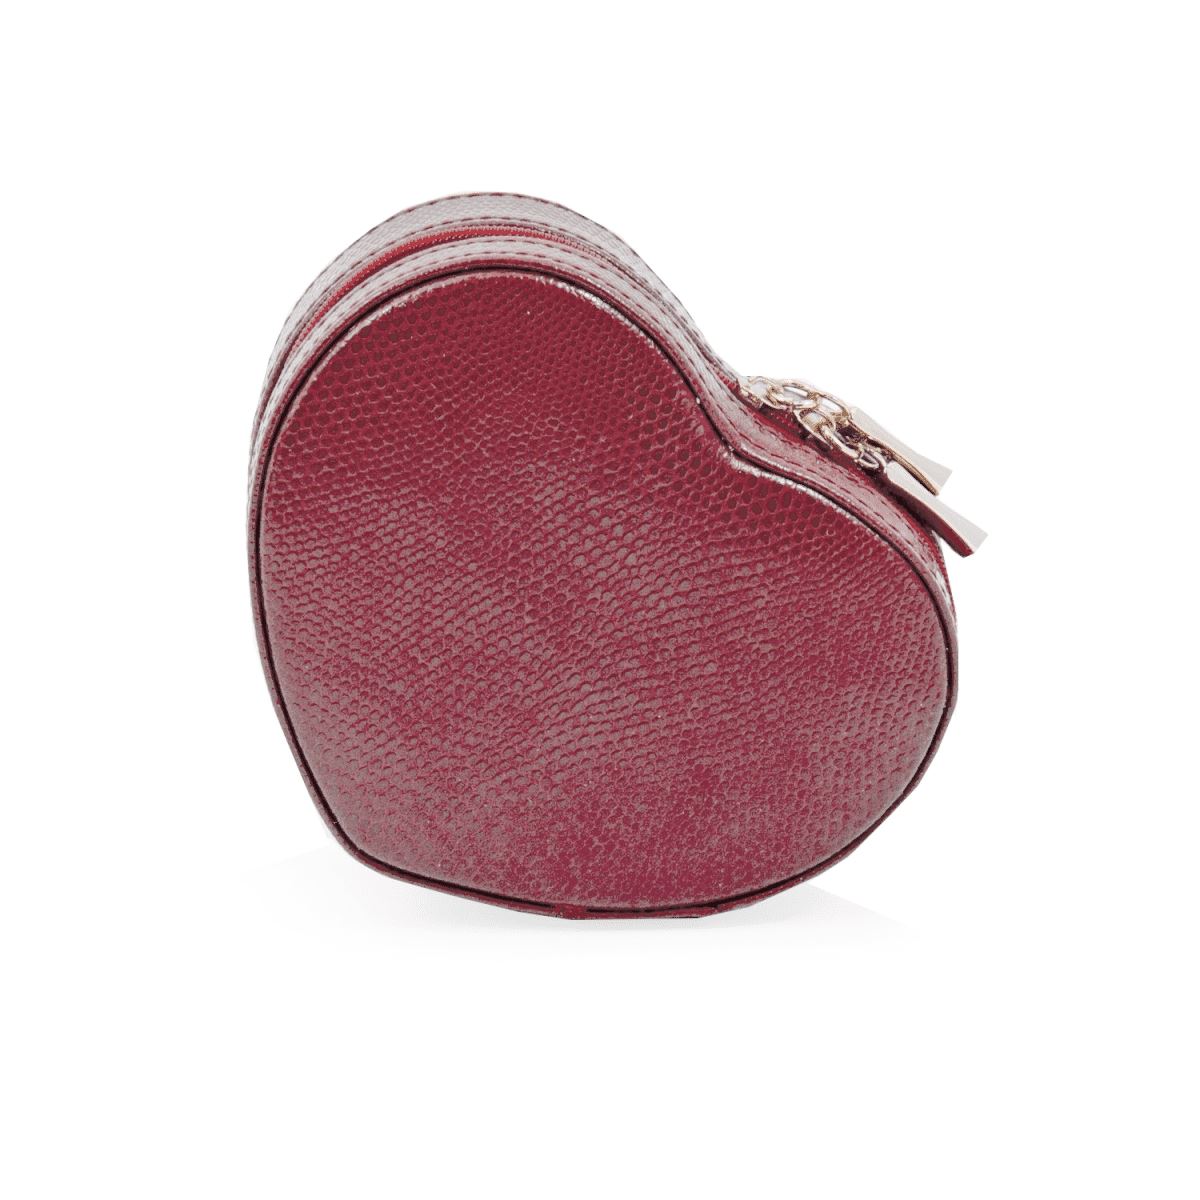  BOENLE Red Lips Heart Jewelry Organizer PU Leather